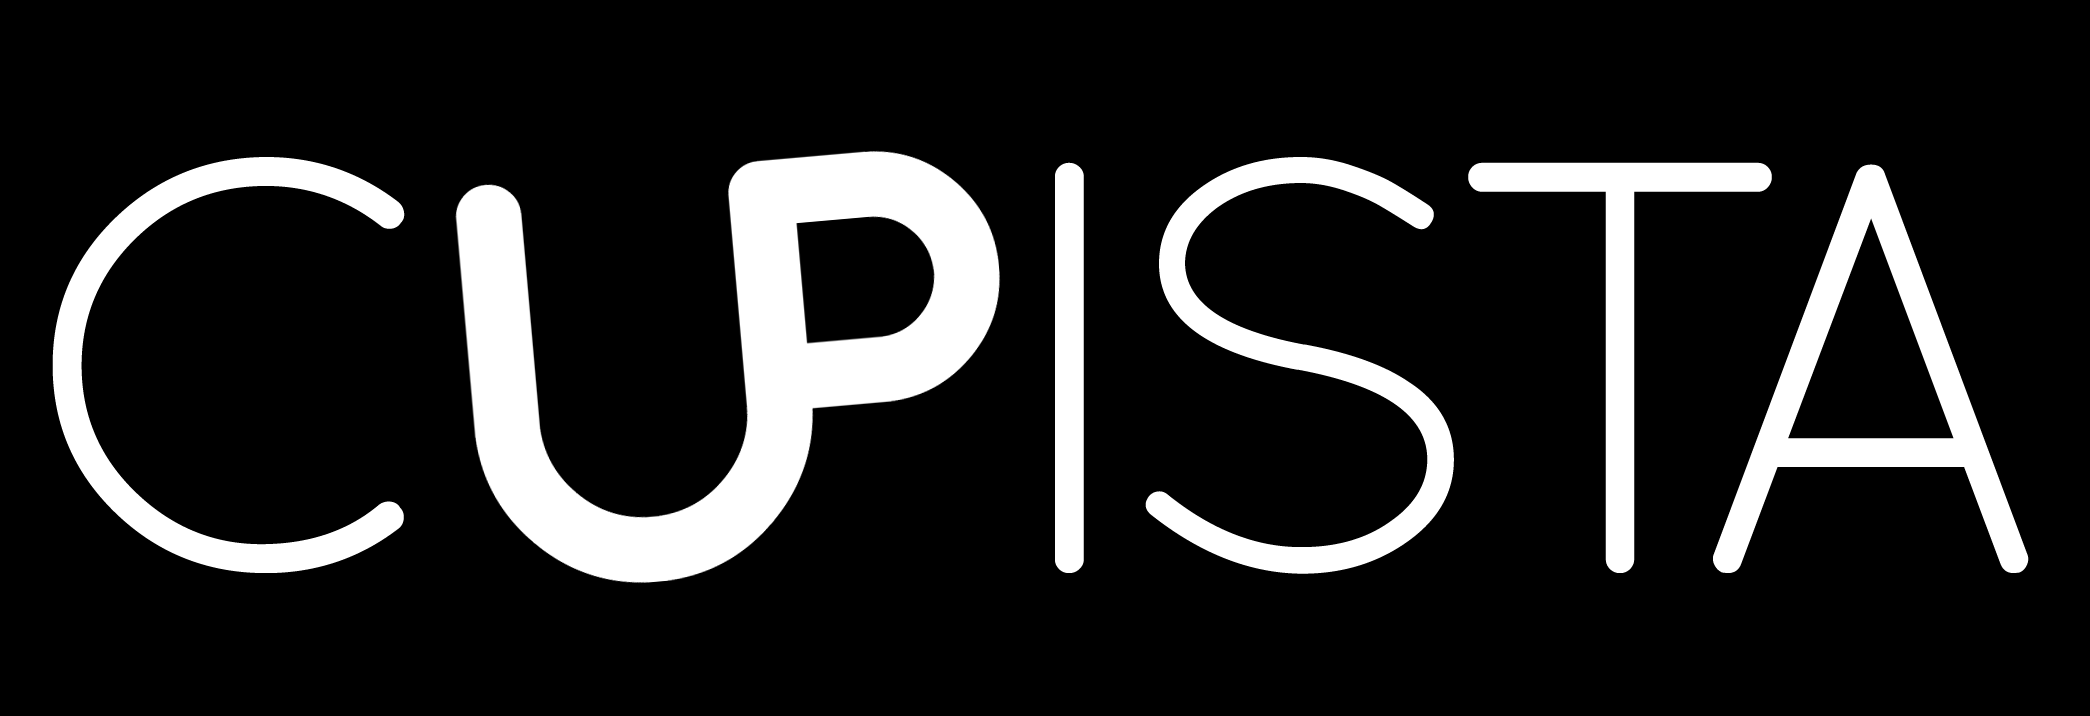 Cupista Logo invers